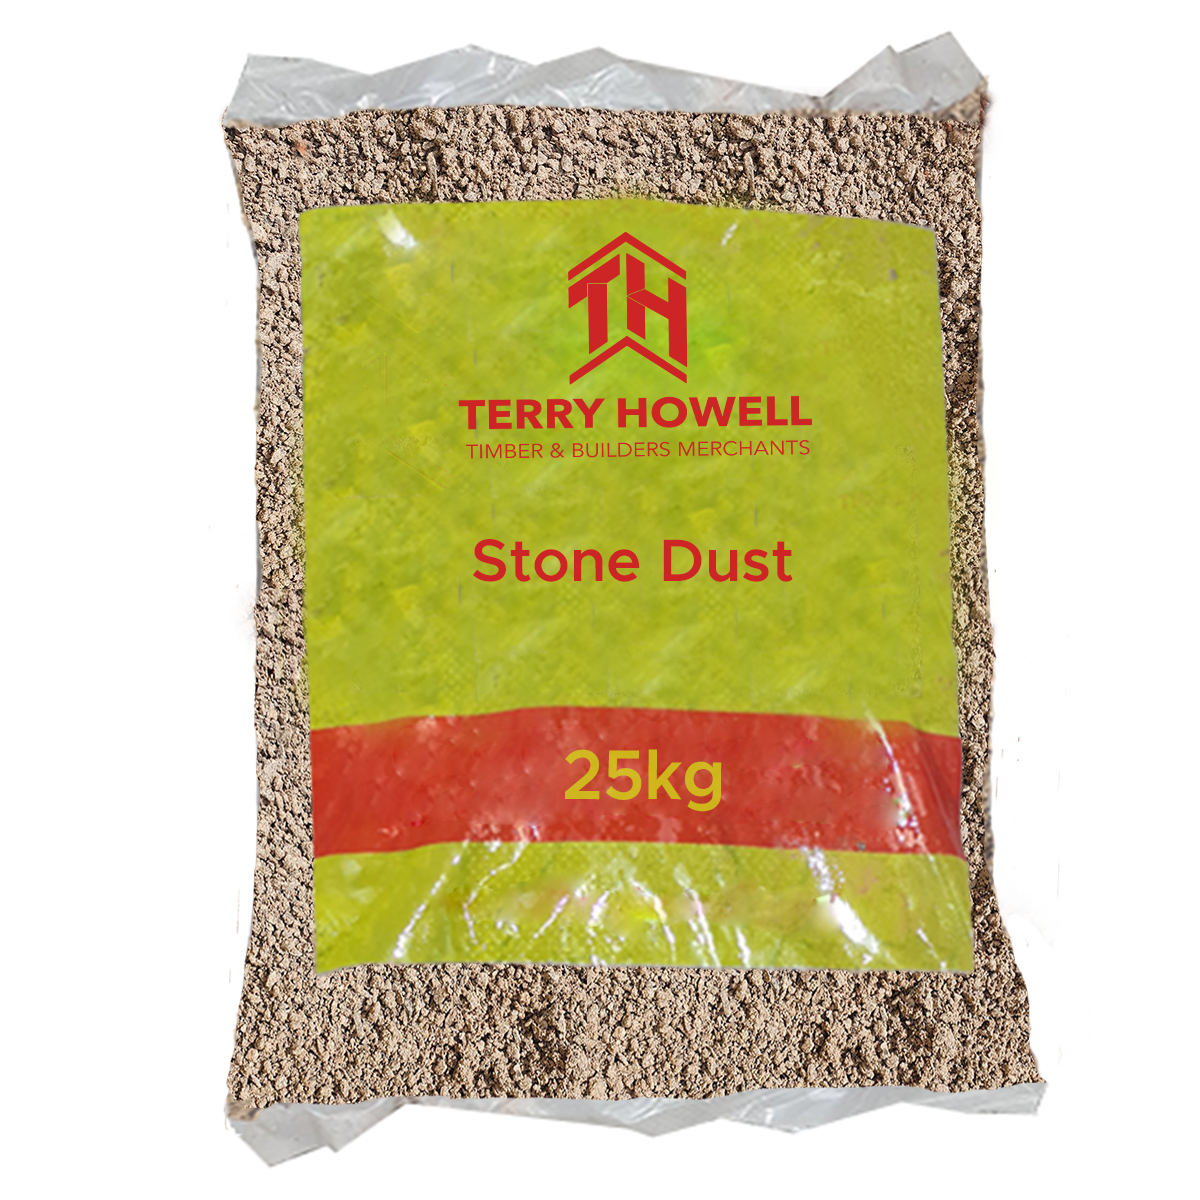 Stone Dust 25kg Bag